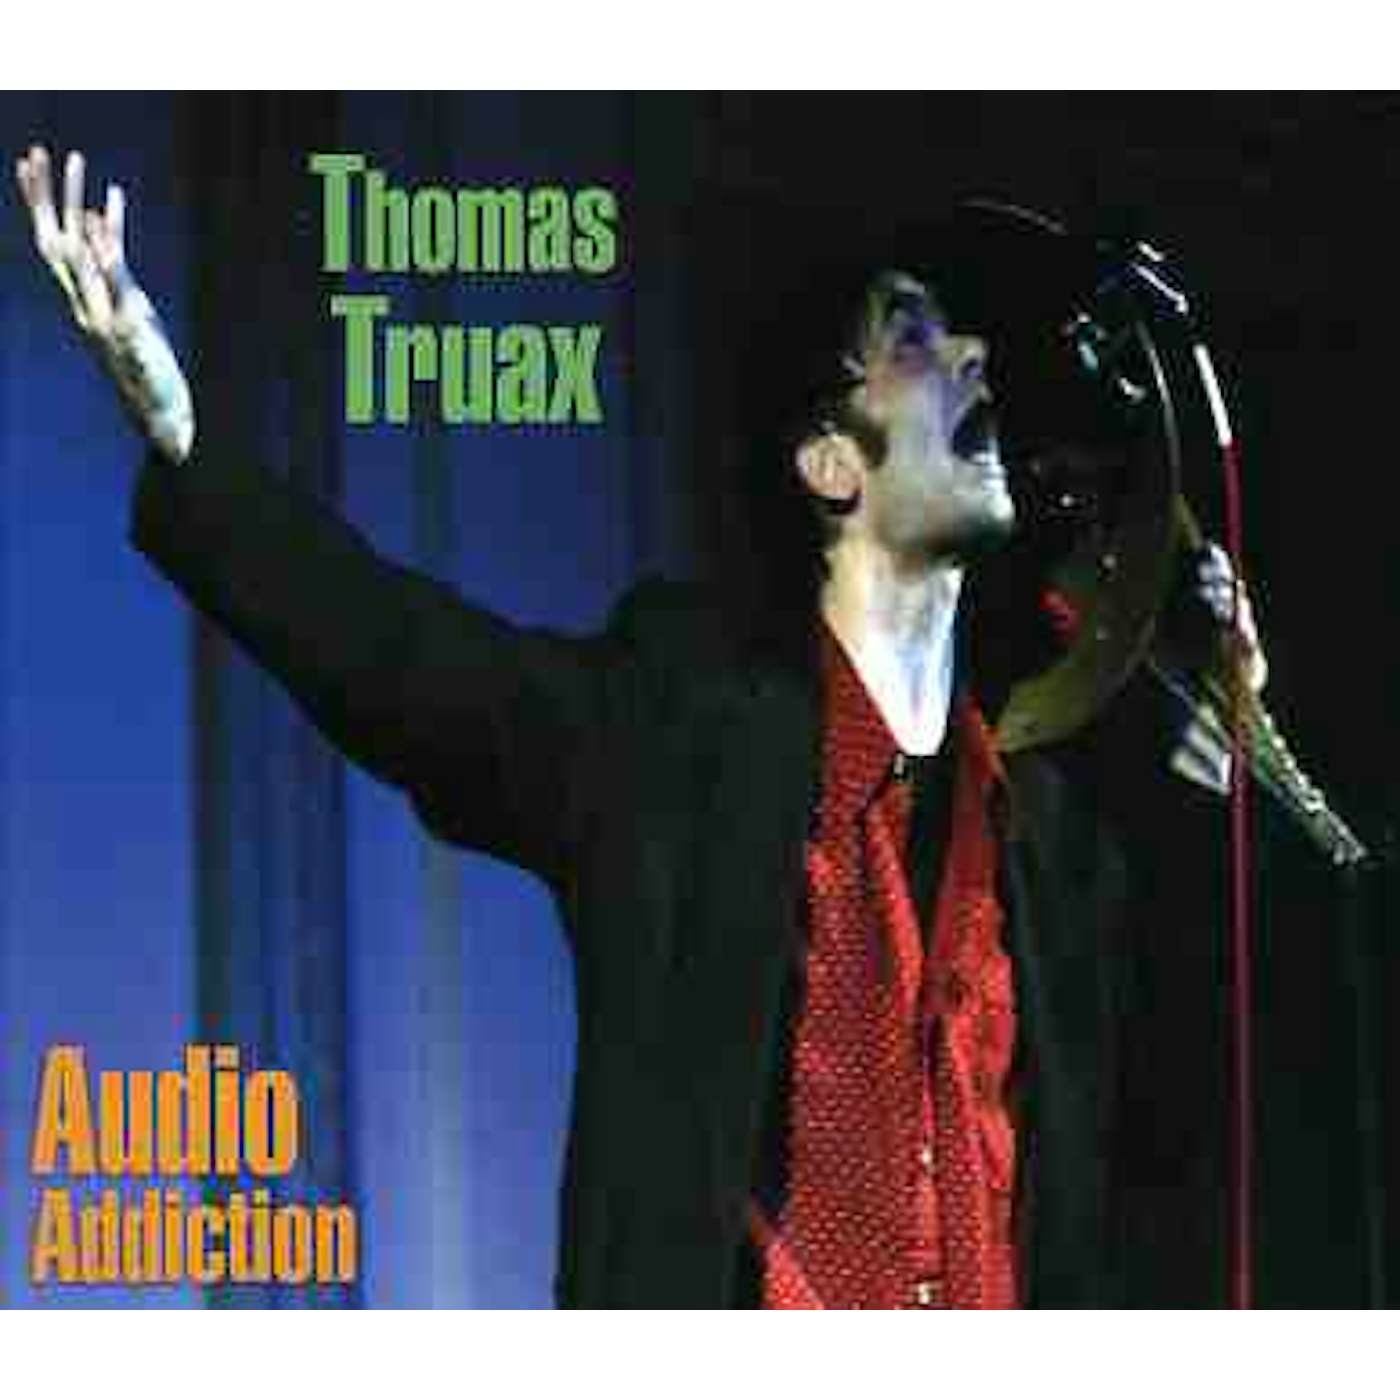 Thomas Truax AUDIO ADDICTION CD